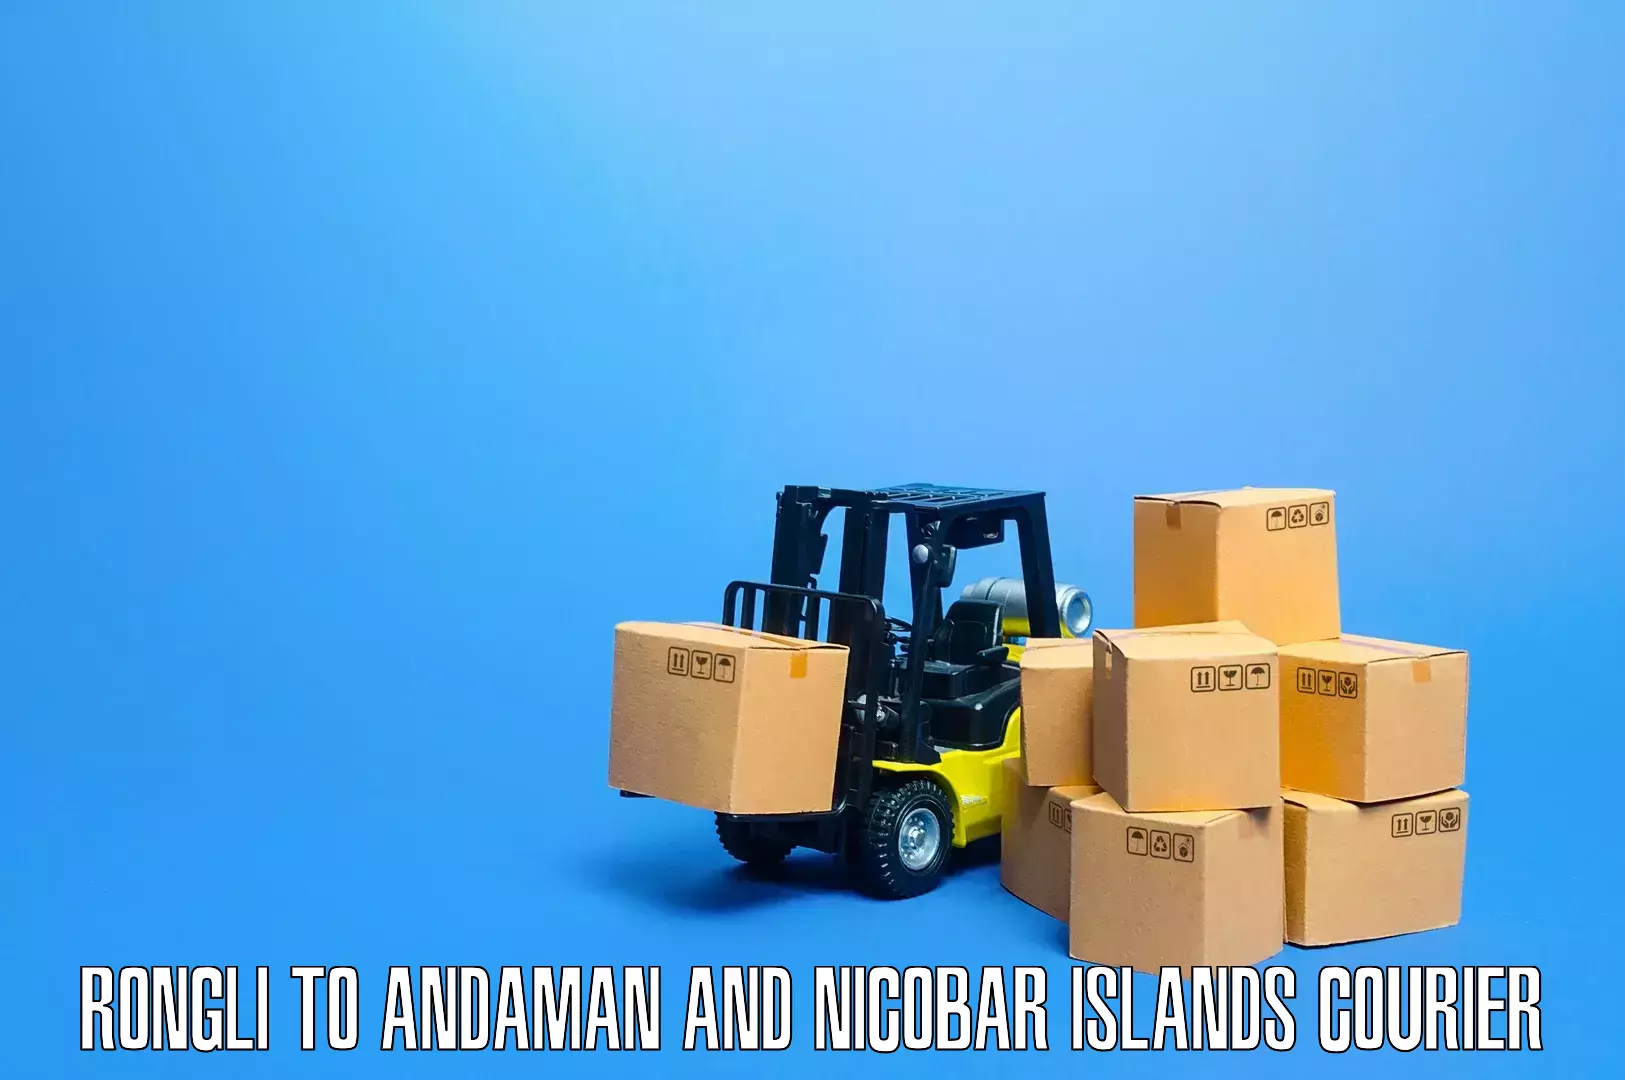 Professional movers Rongli to Andaman and Nicobar Islands